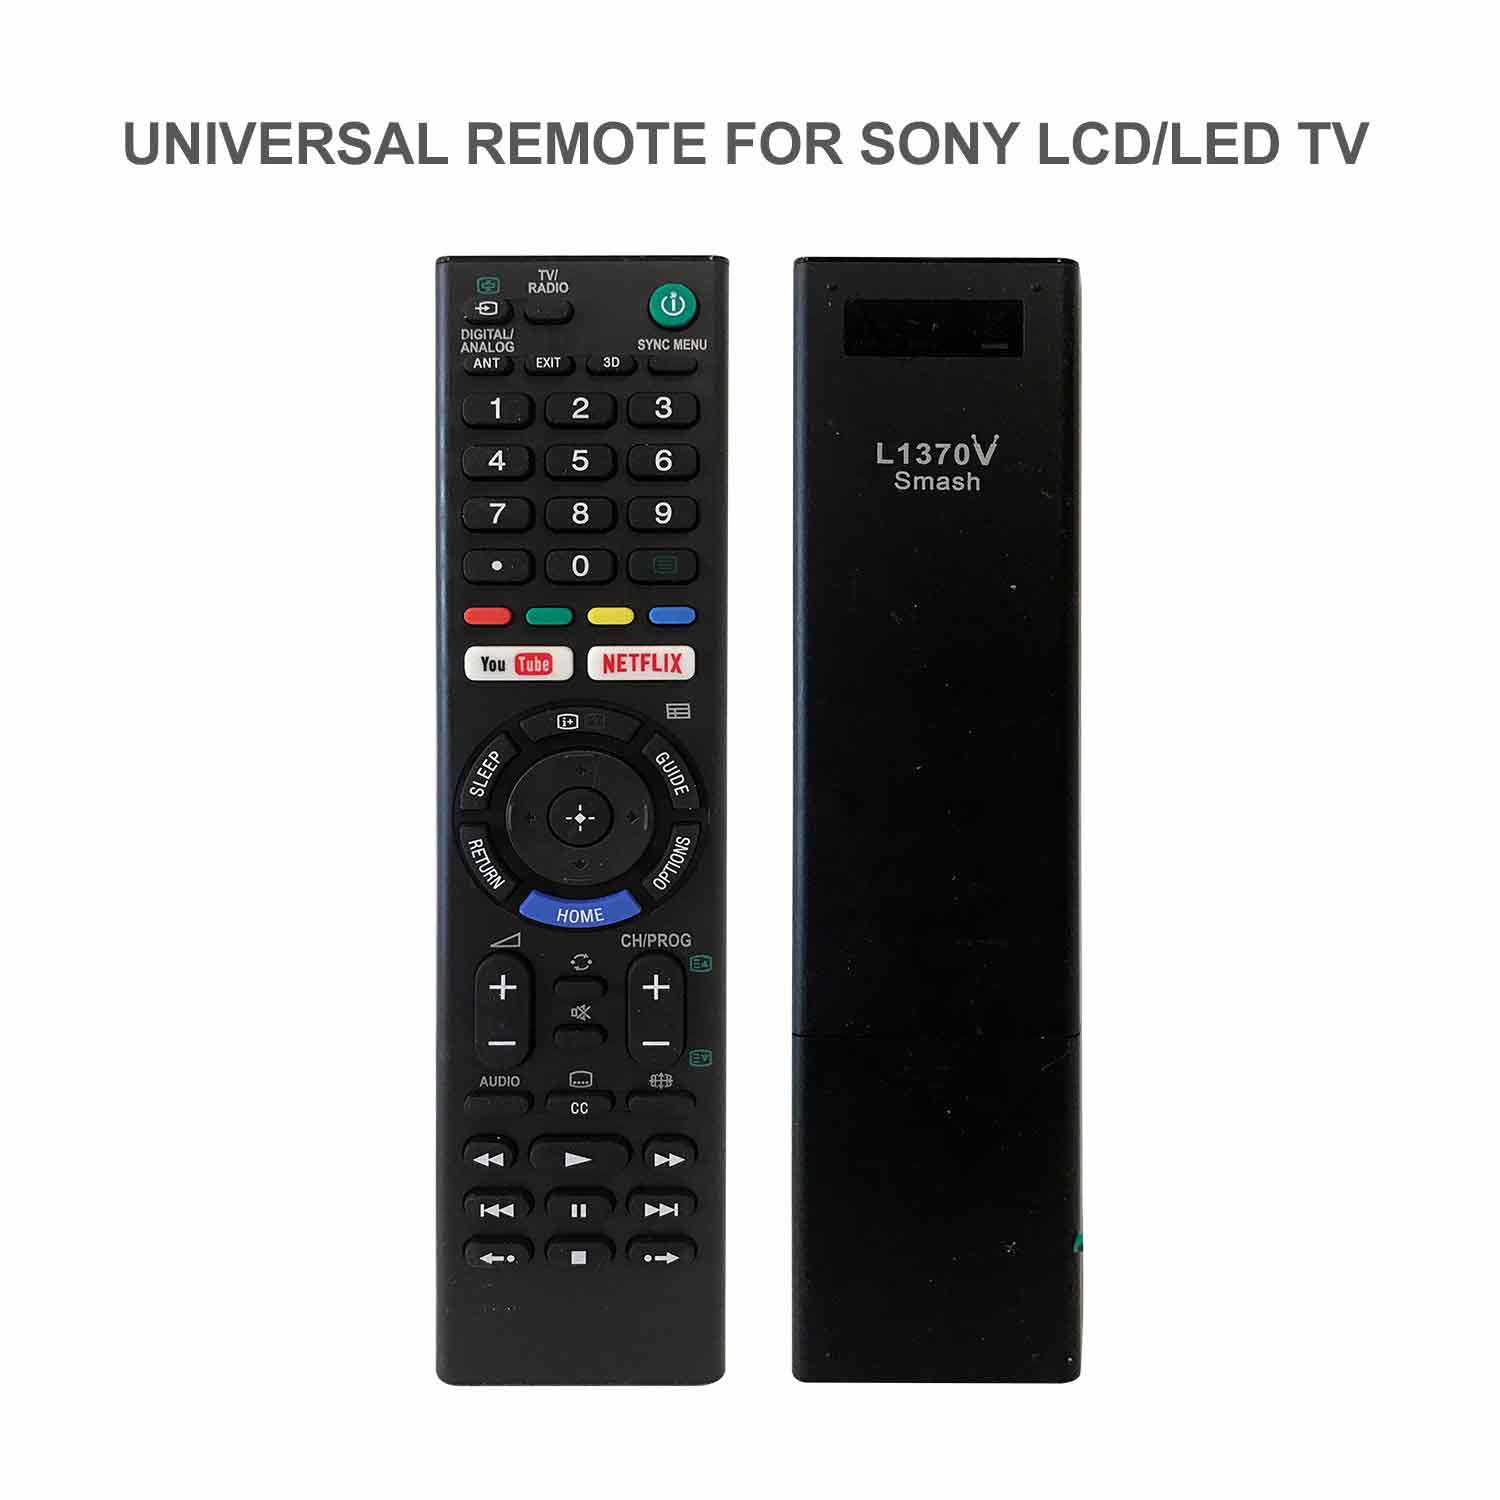 Sony TV Compatible Remote - Smash L1370V LCD LED TV Universal Remote Control